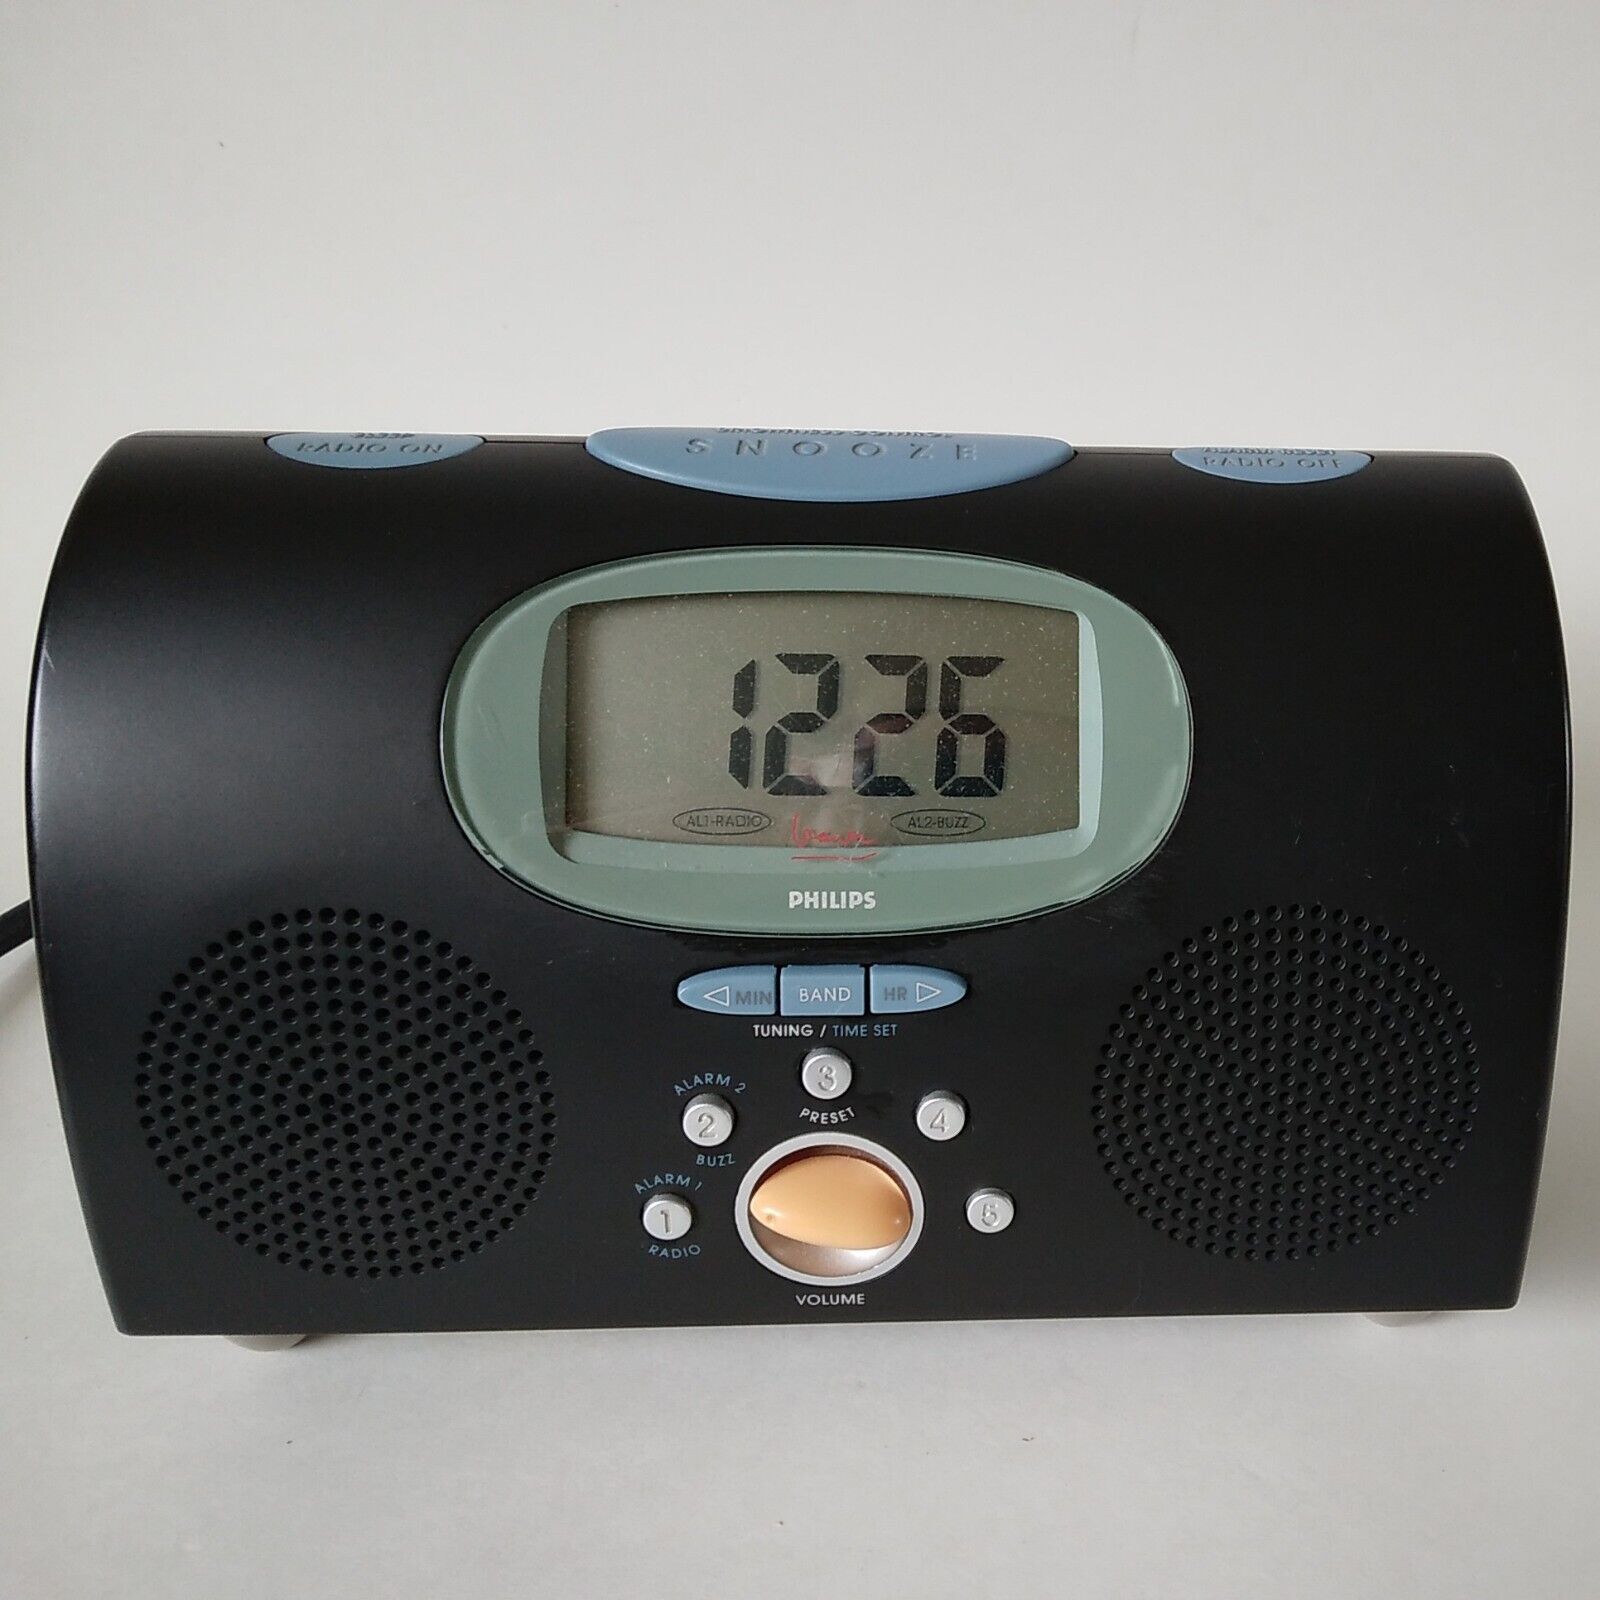 Philips Model: C200/17 Radio Alarm Clock-AM/FM-Corded-Black-Tested Works